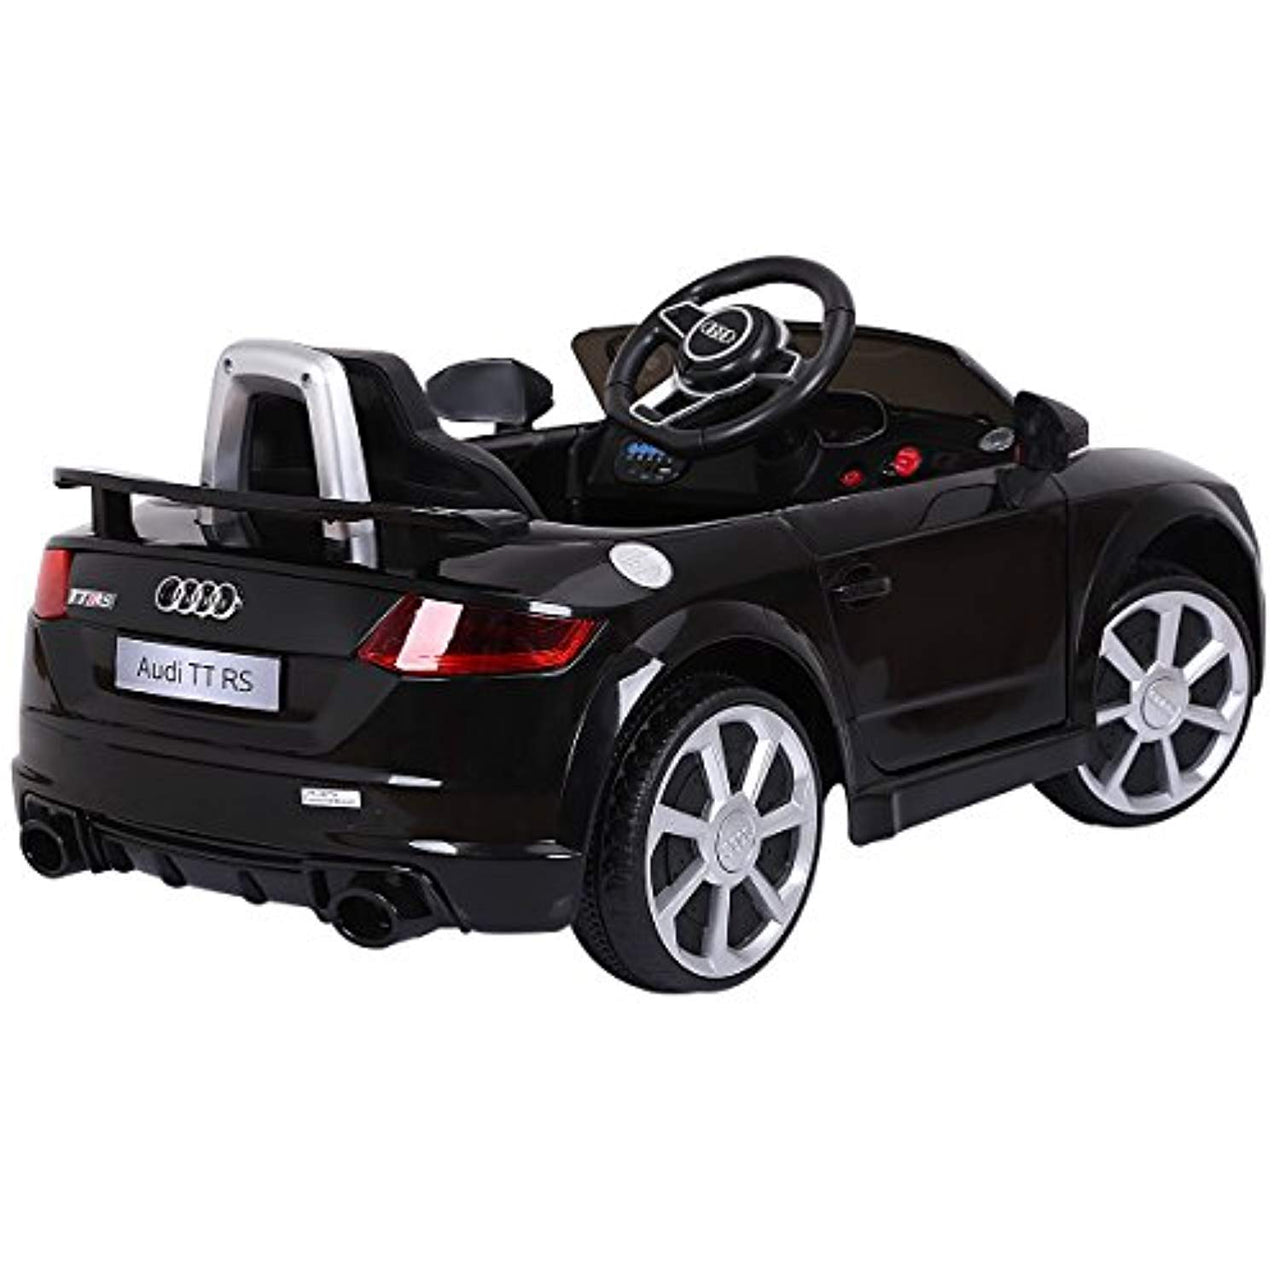 New 2019 Kids Ride On Car, Licensed 12V Audi TT RS, Remote Control Manual Two Modes Operation, MP3 Lights (Black) - LK Auto Factors